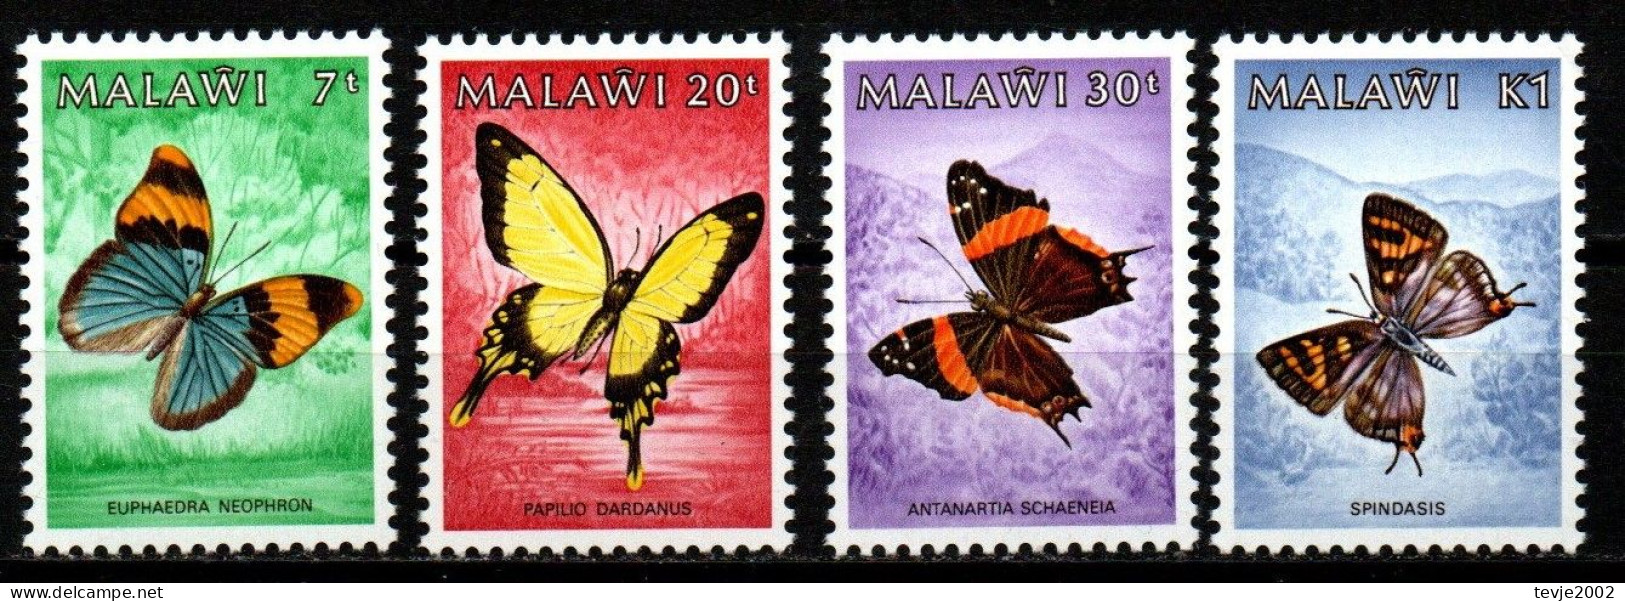 Malawi 1984 - Mi.Nr. 432 - 435 - Postfrisch MNH - Tiere Animals Schmetterlinge Butterflies - Schmetterlinge